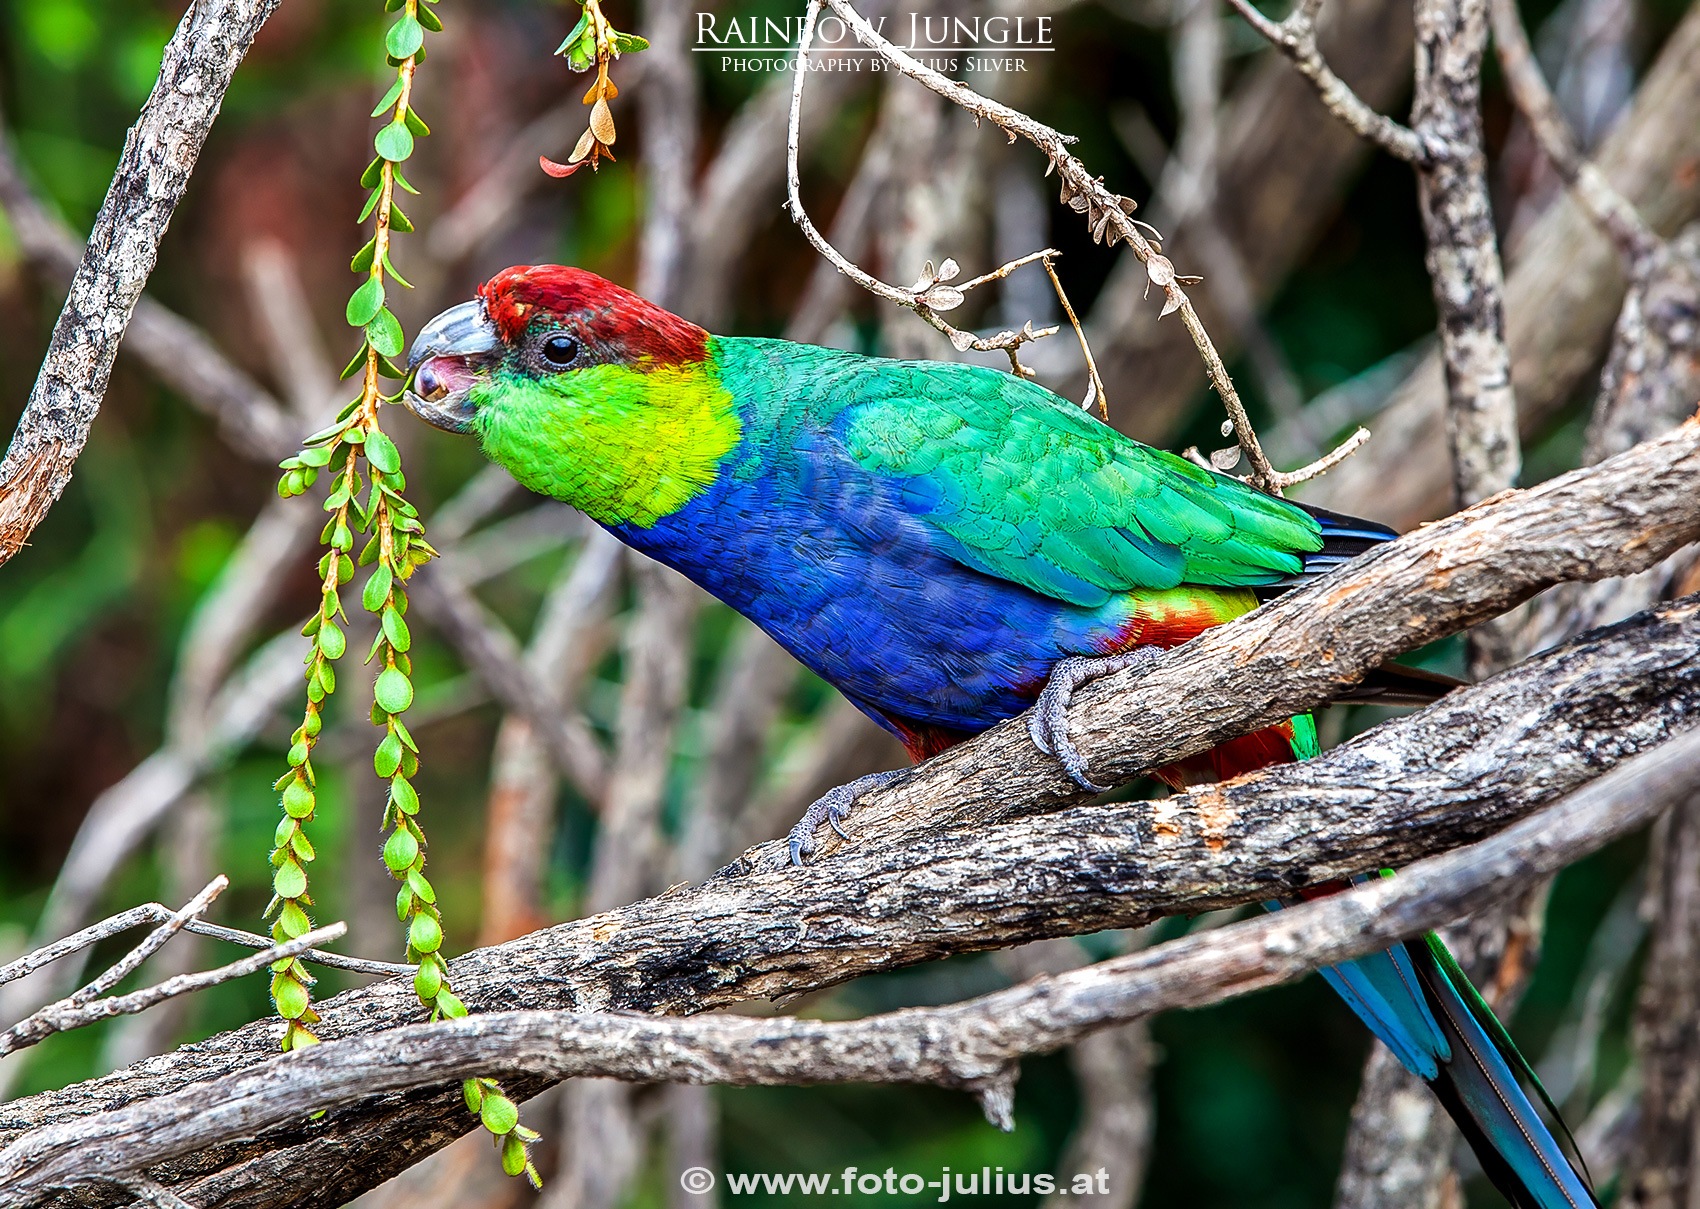 Australia_263a_Rainbow_Jungle.jpg, 1,0MB